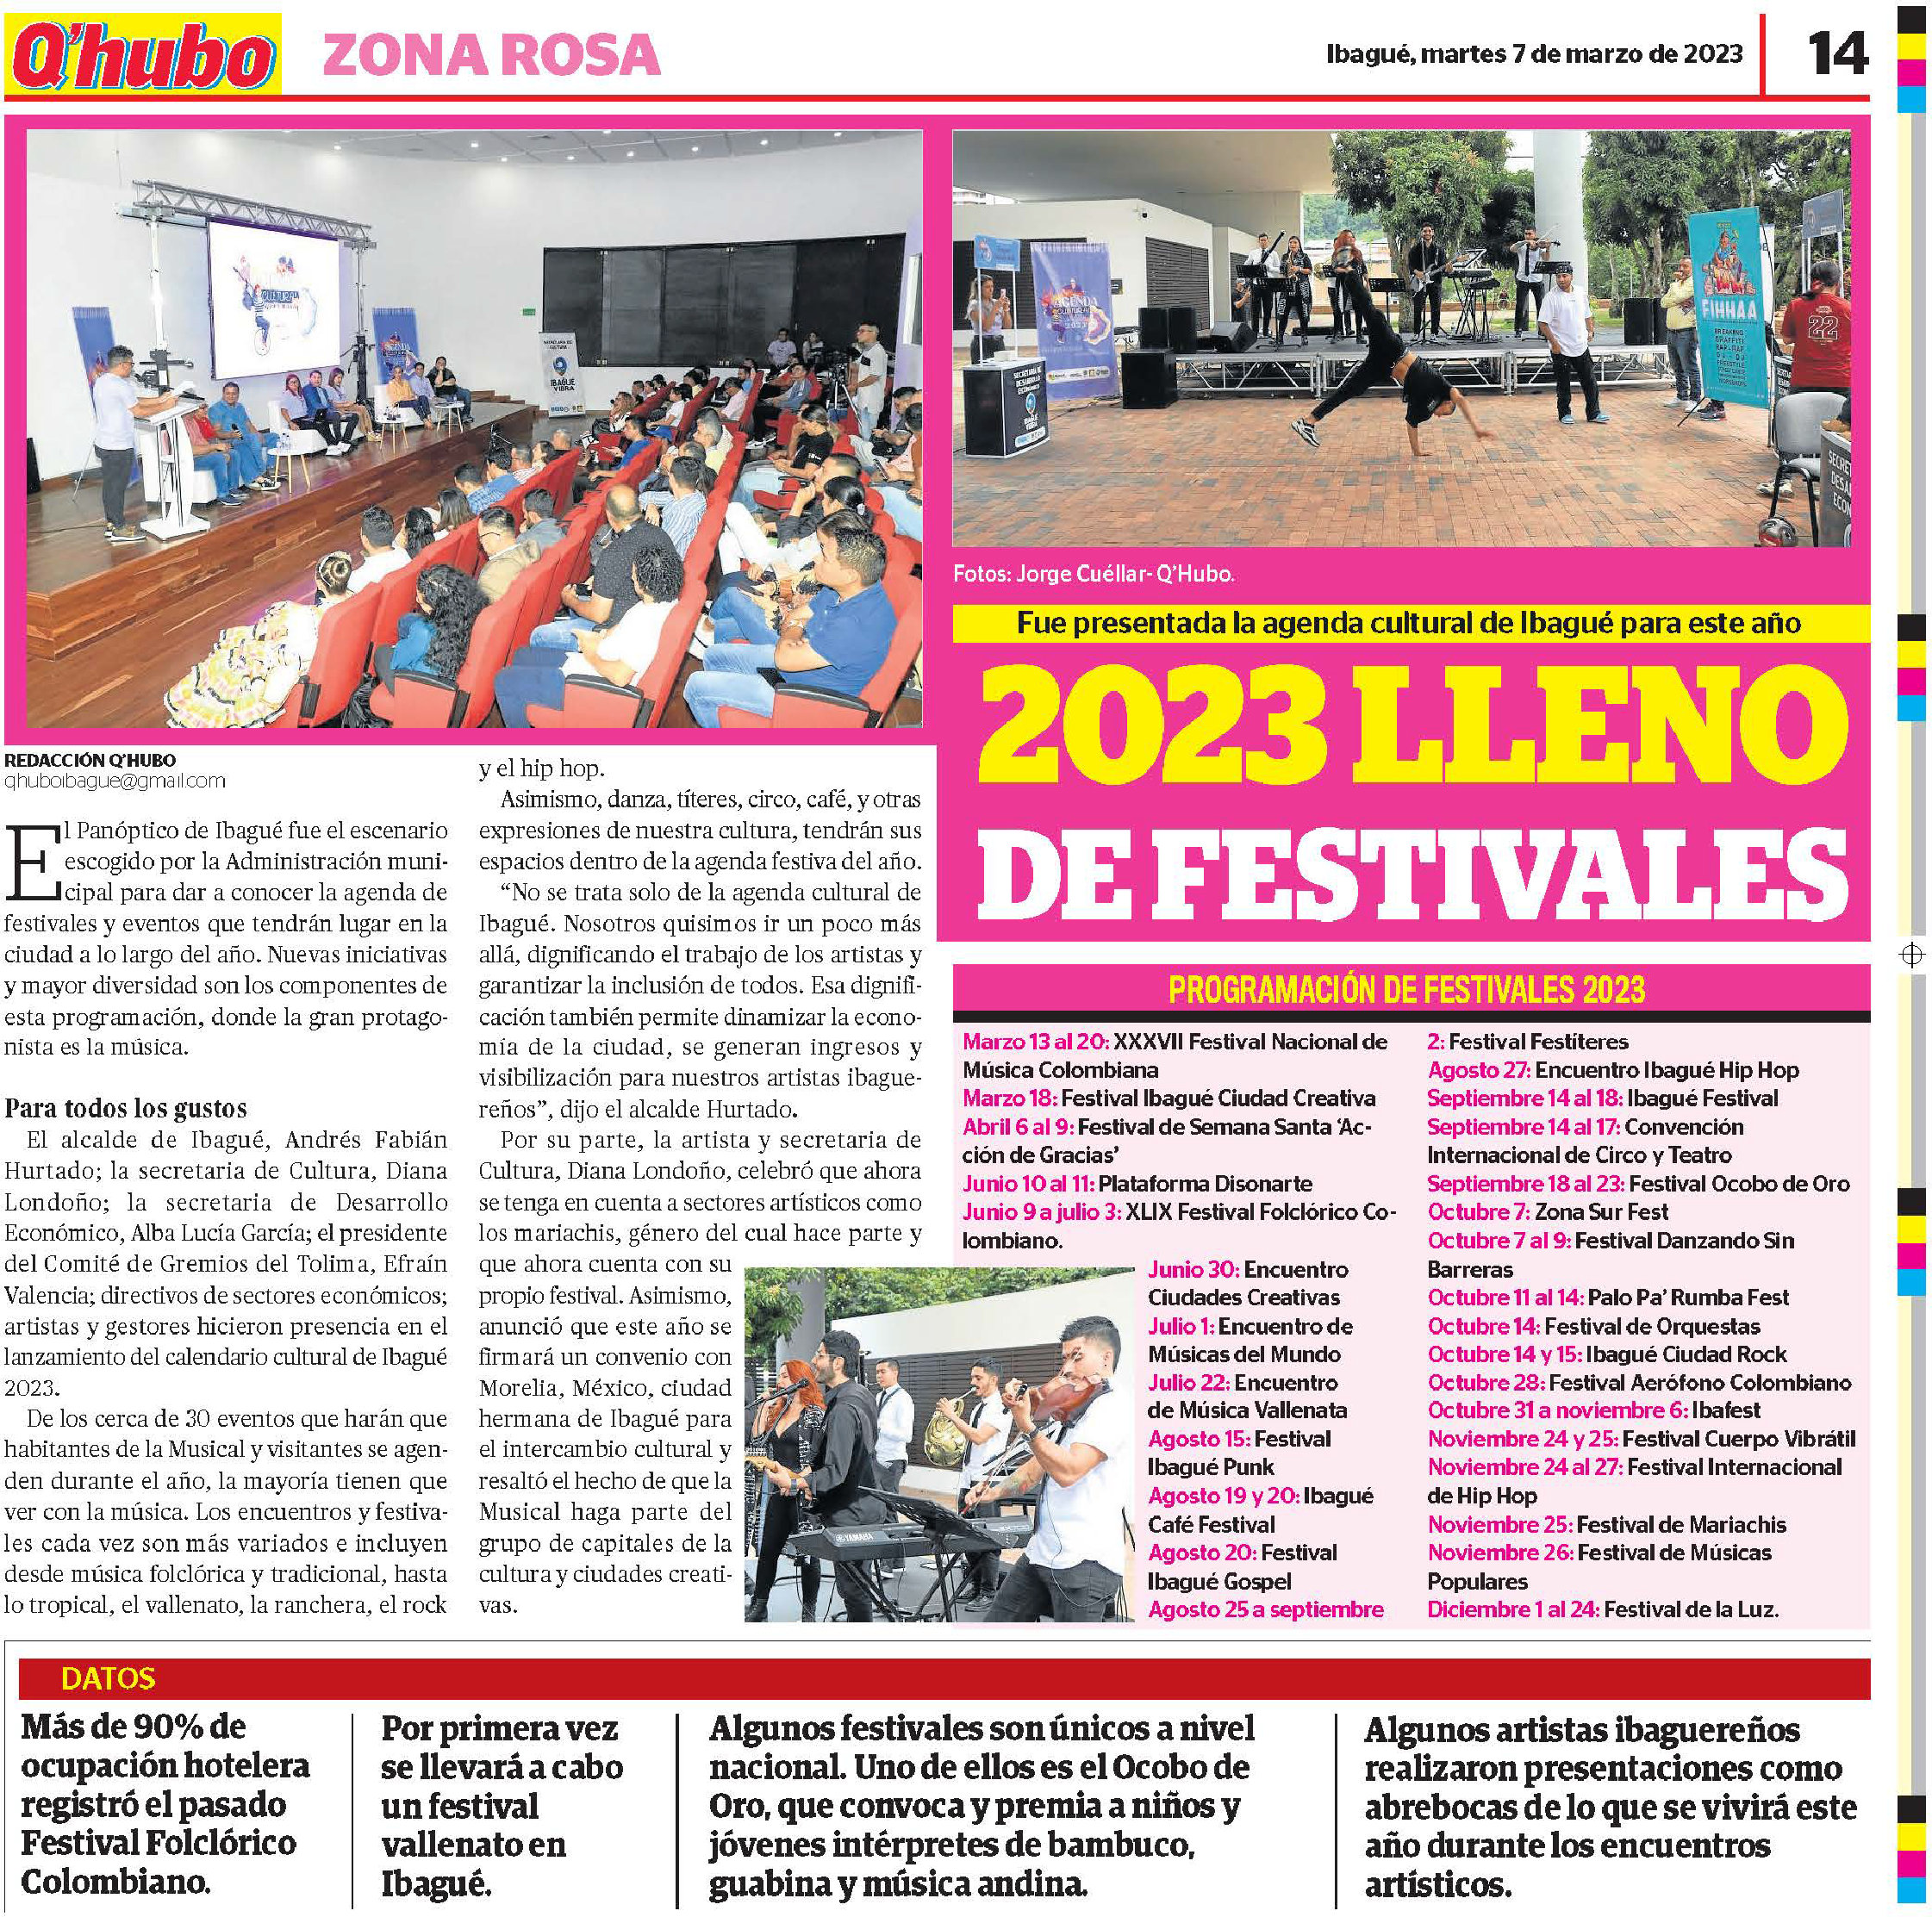 P_873-2023-03-07_2023-lleno-de-festivales---Festival-Nacional-de-la-Musica-Colombiana_Qhubo_14_12cm_x_2col_